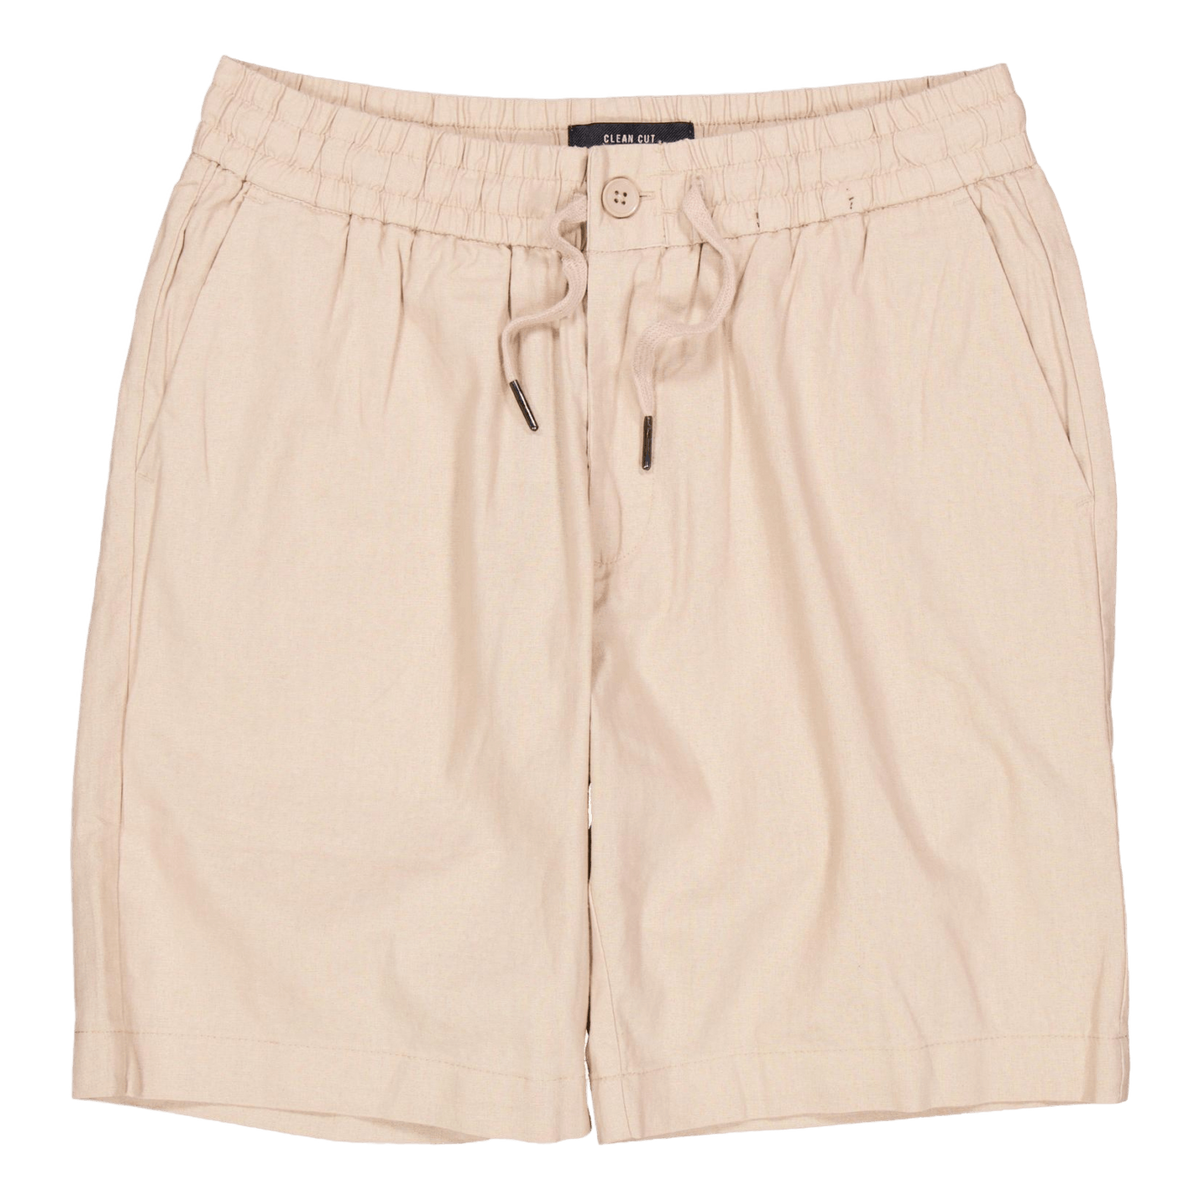 Barcelona Cotton / Linen Short Khaki